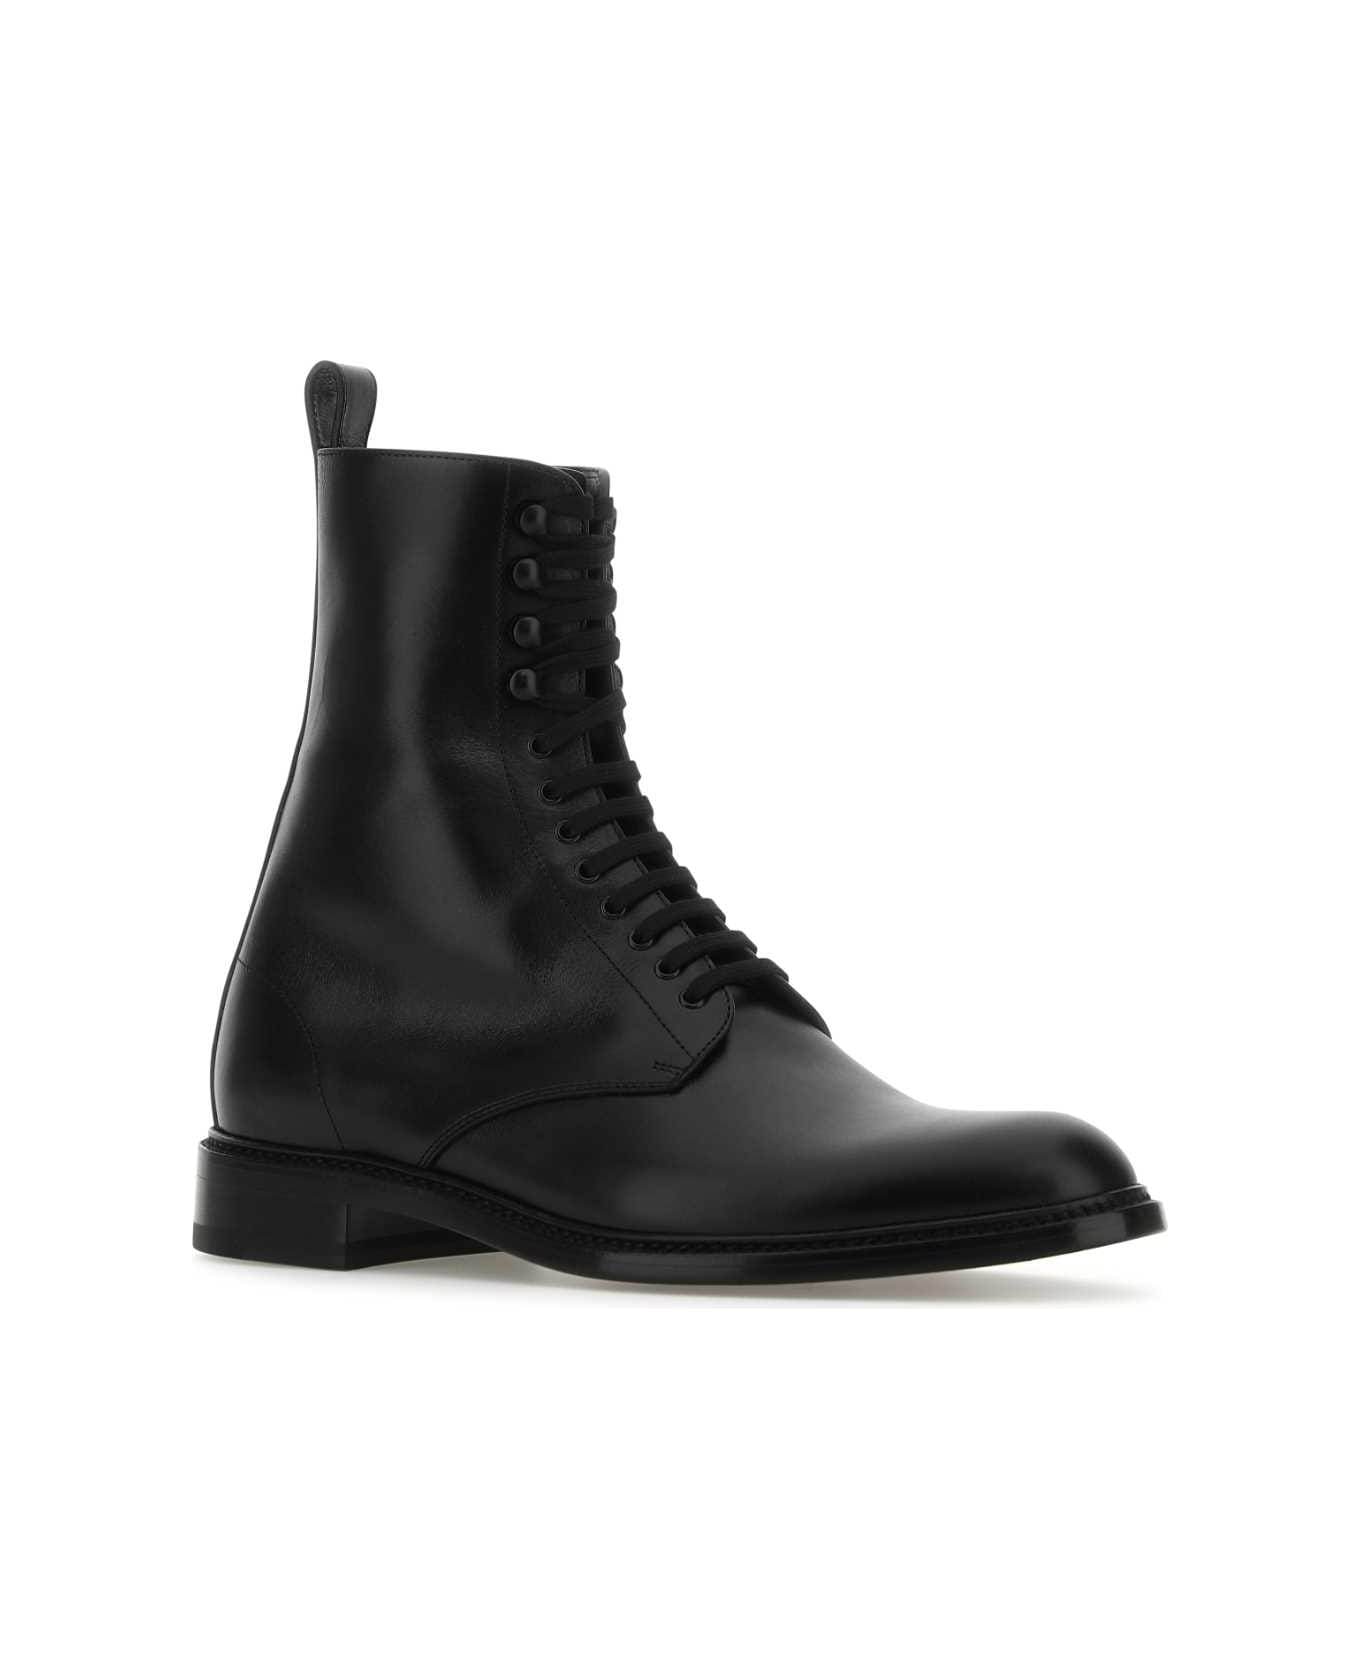 Saint Laurent Black Leather Army Ankle Boots - Black